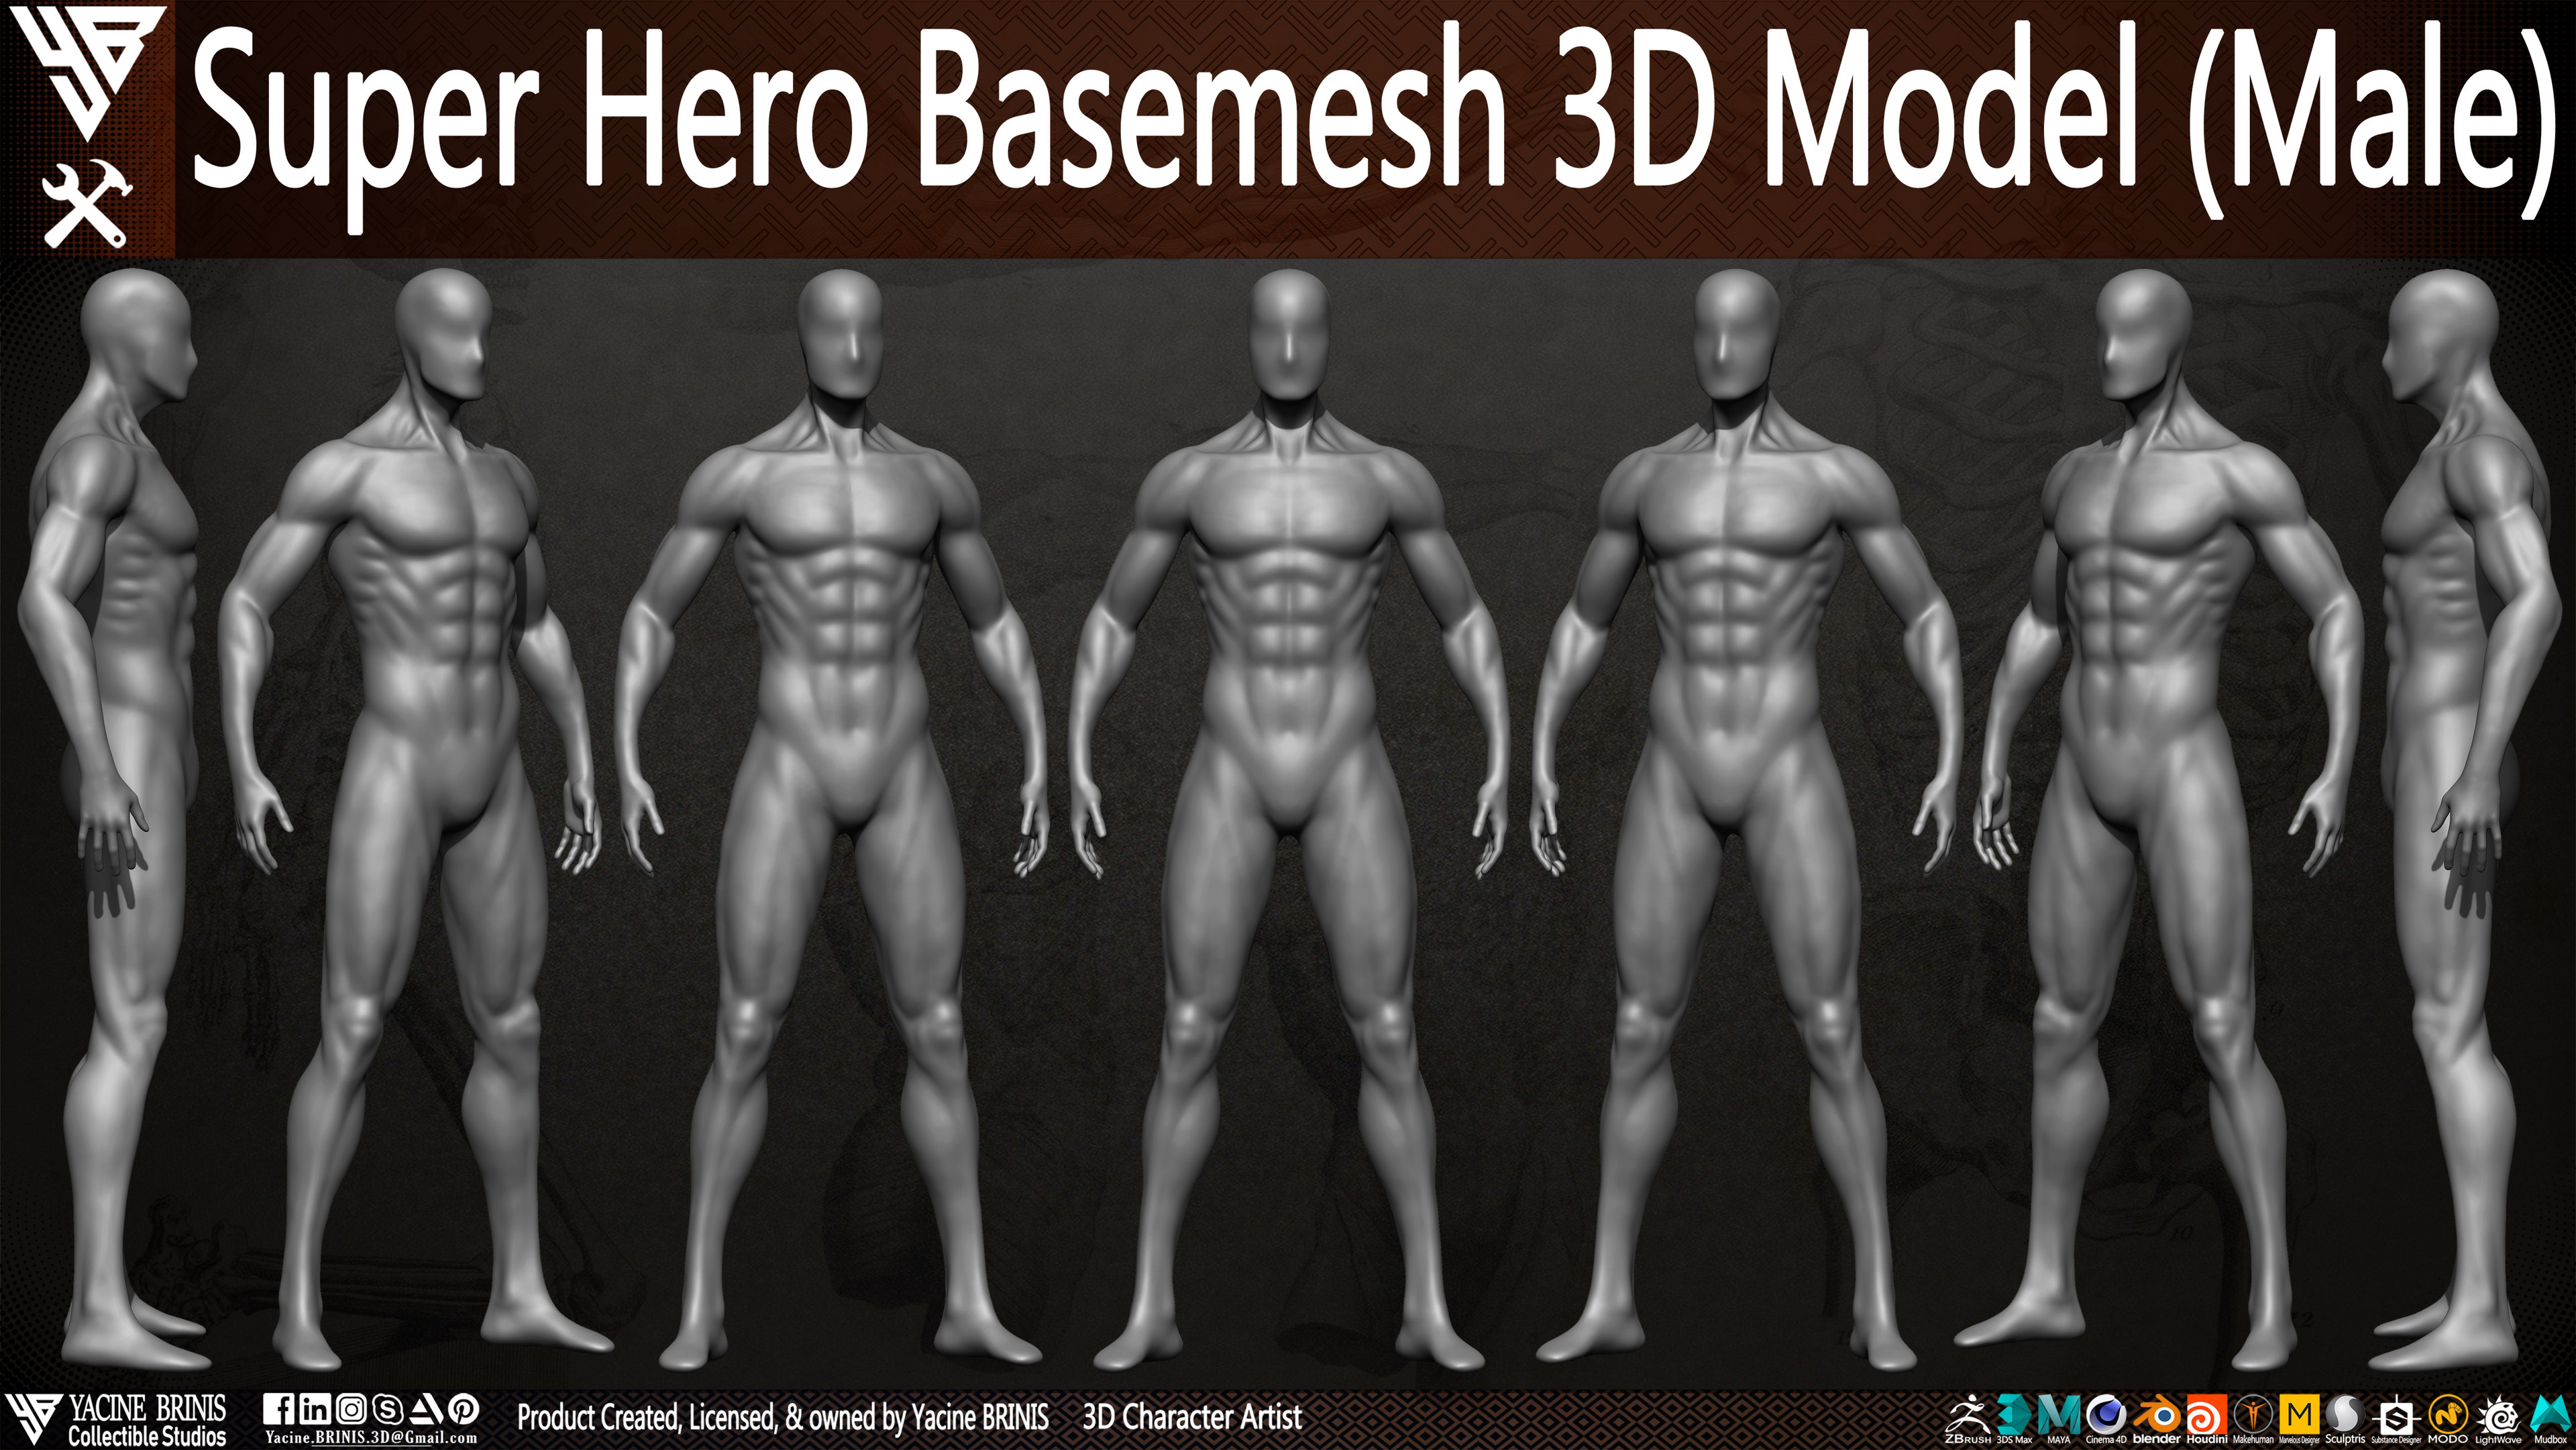 Super Hero Basemesh 3D Model Male By Yacine BRINIS Vol 01 Set 001